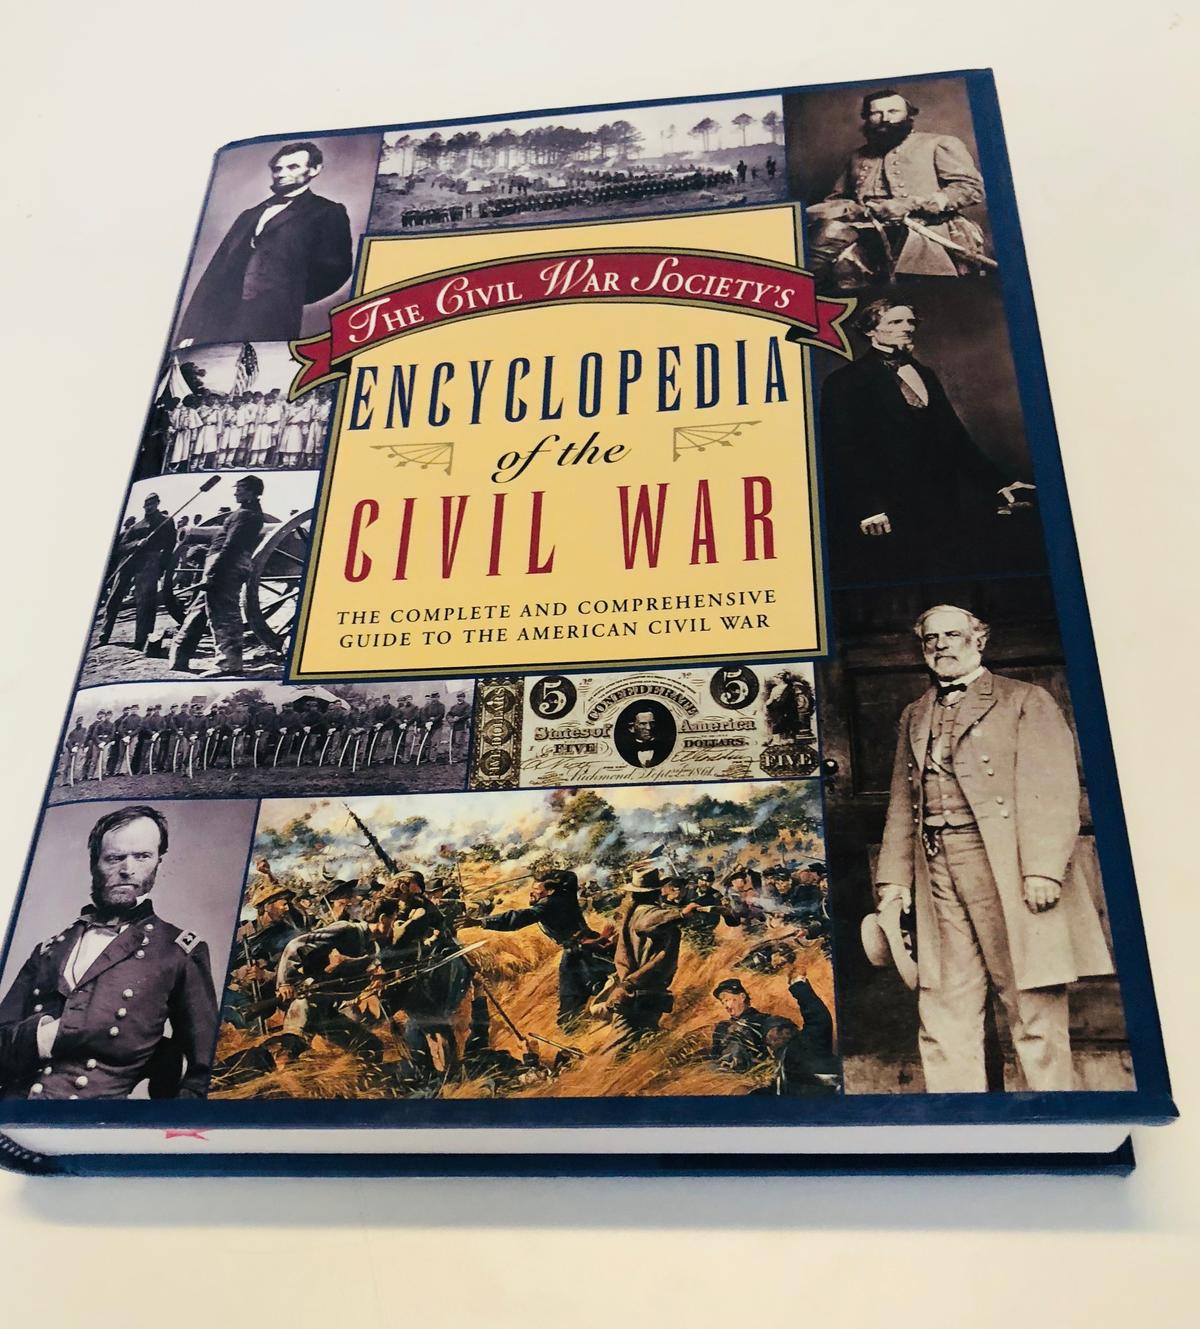 The CIVIL WAR Society's Encyclopedia of the CIVIL WAR